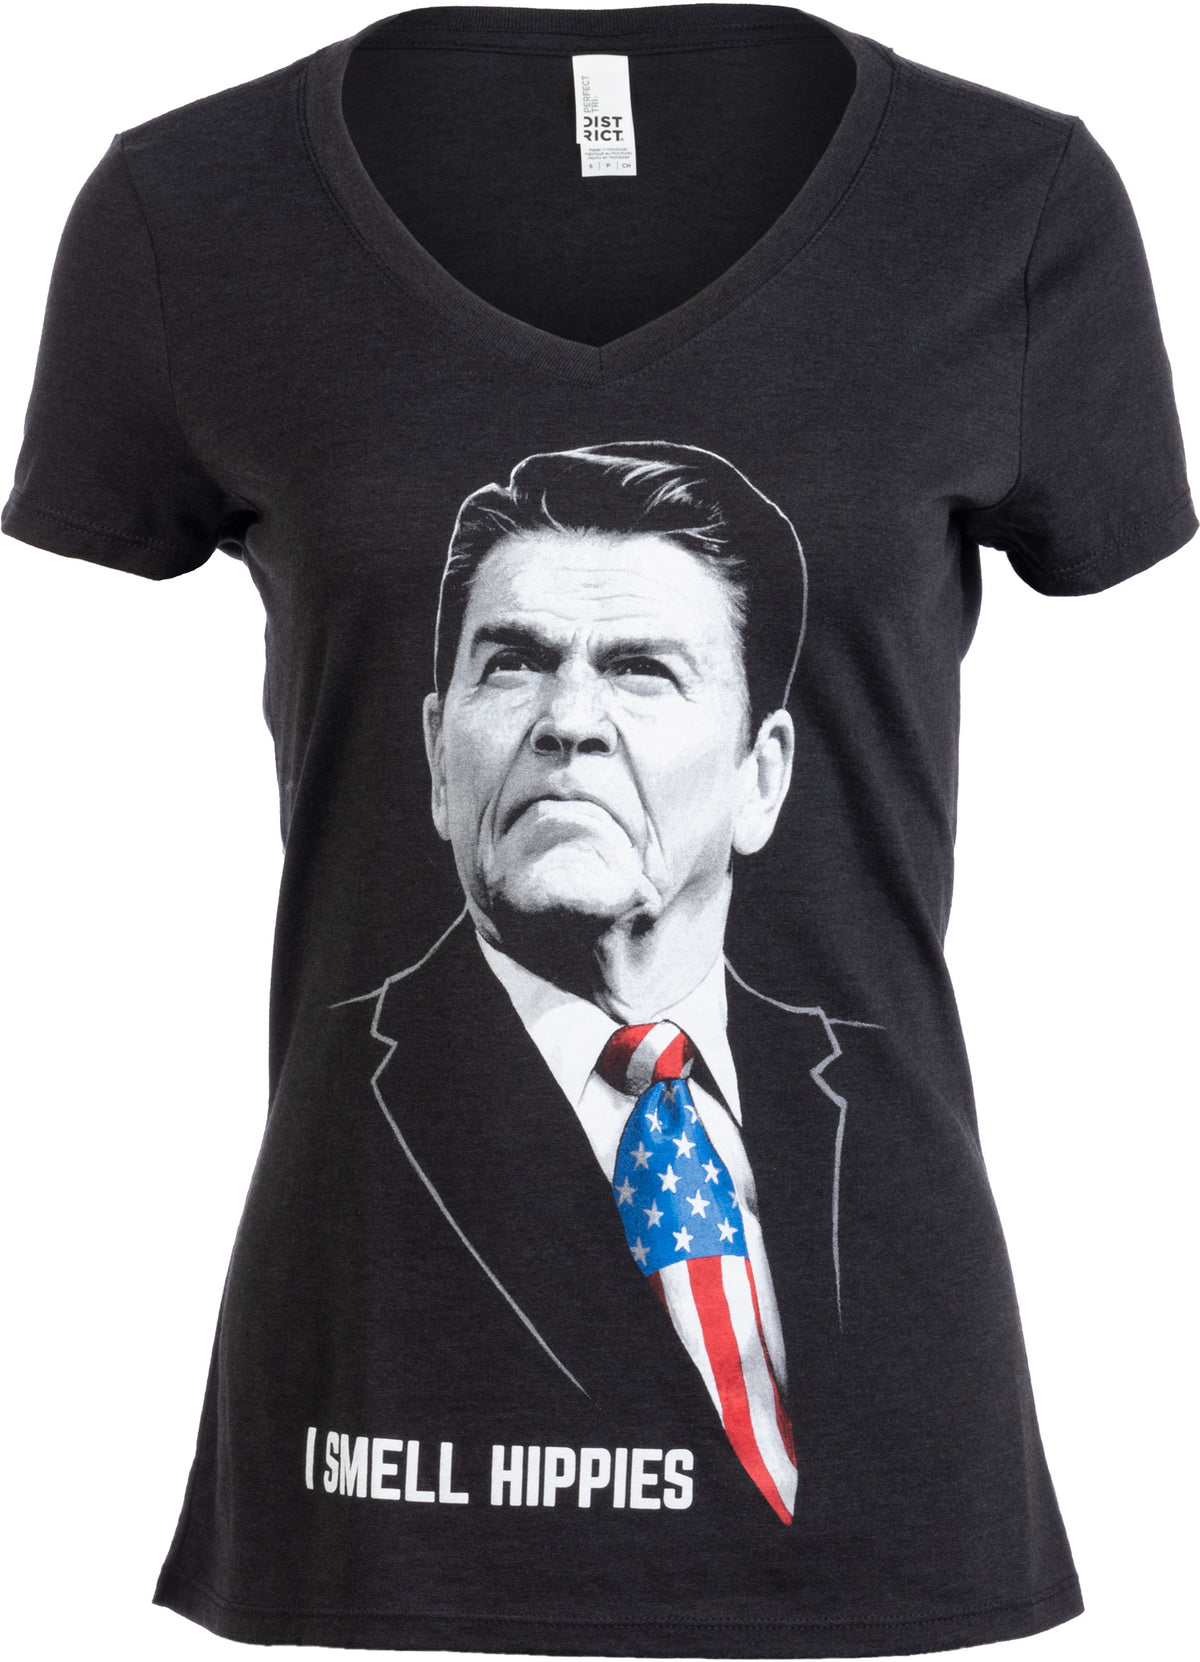 I Smell Hippies - Funny Reagan Conservative Merica USA Republican V-neck Shirt - Women's